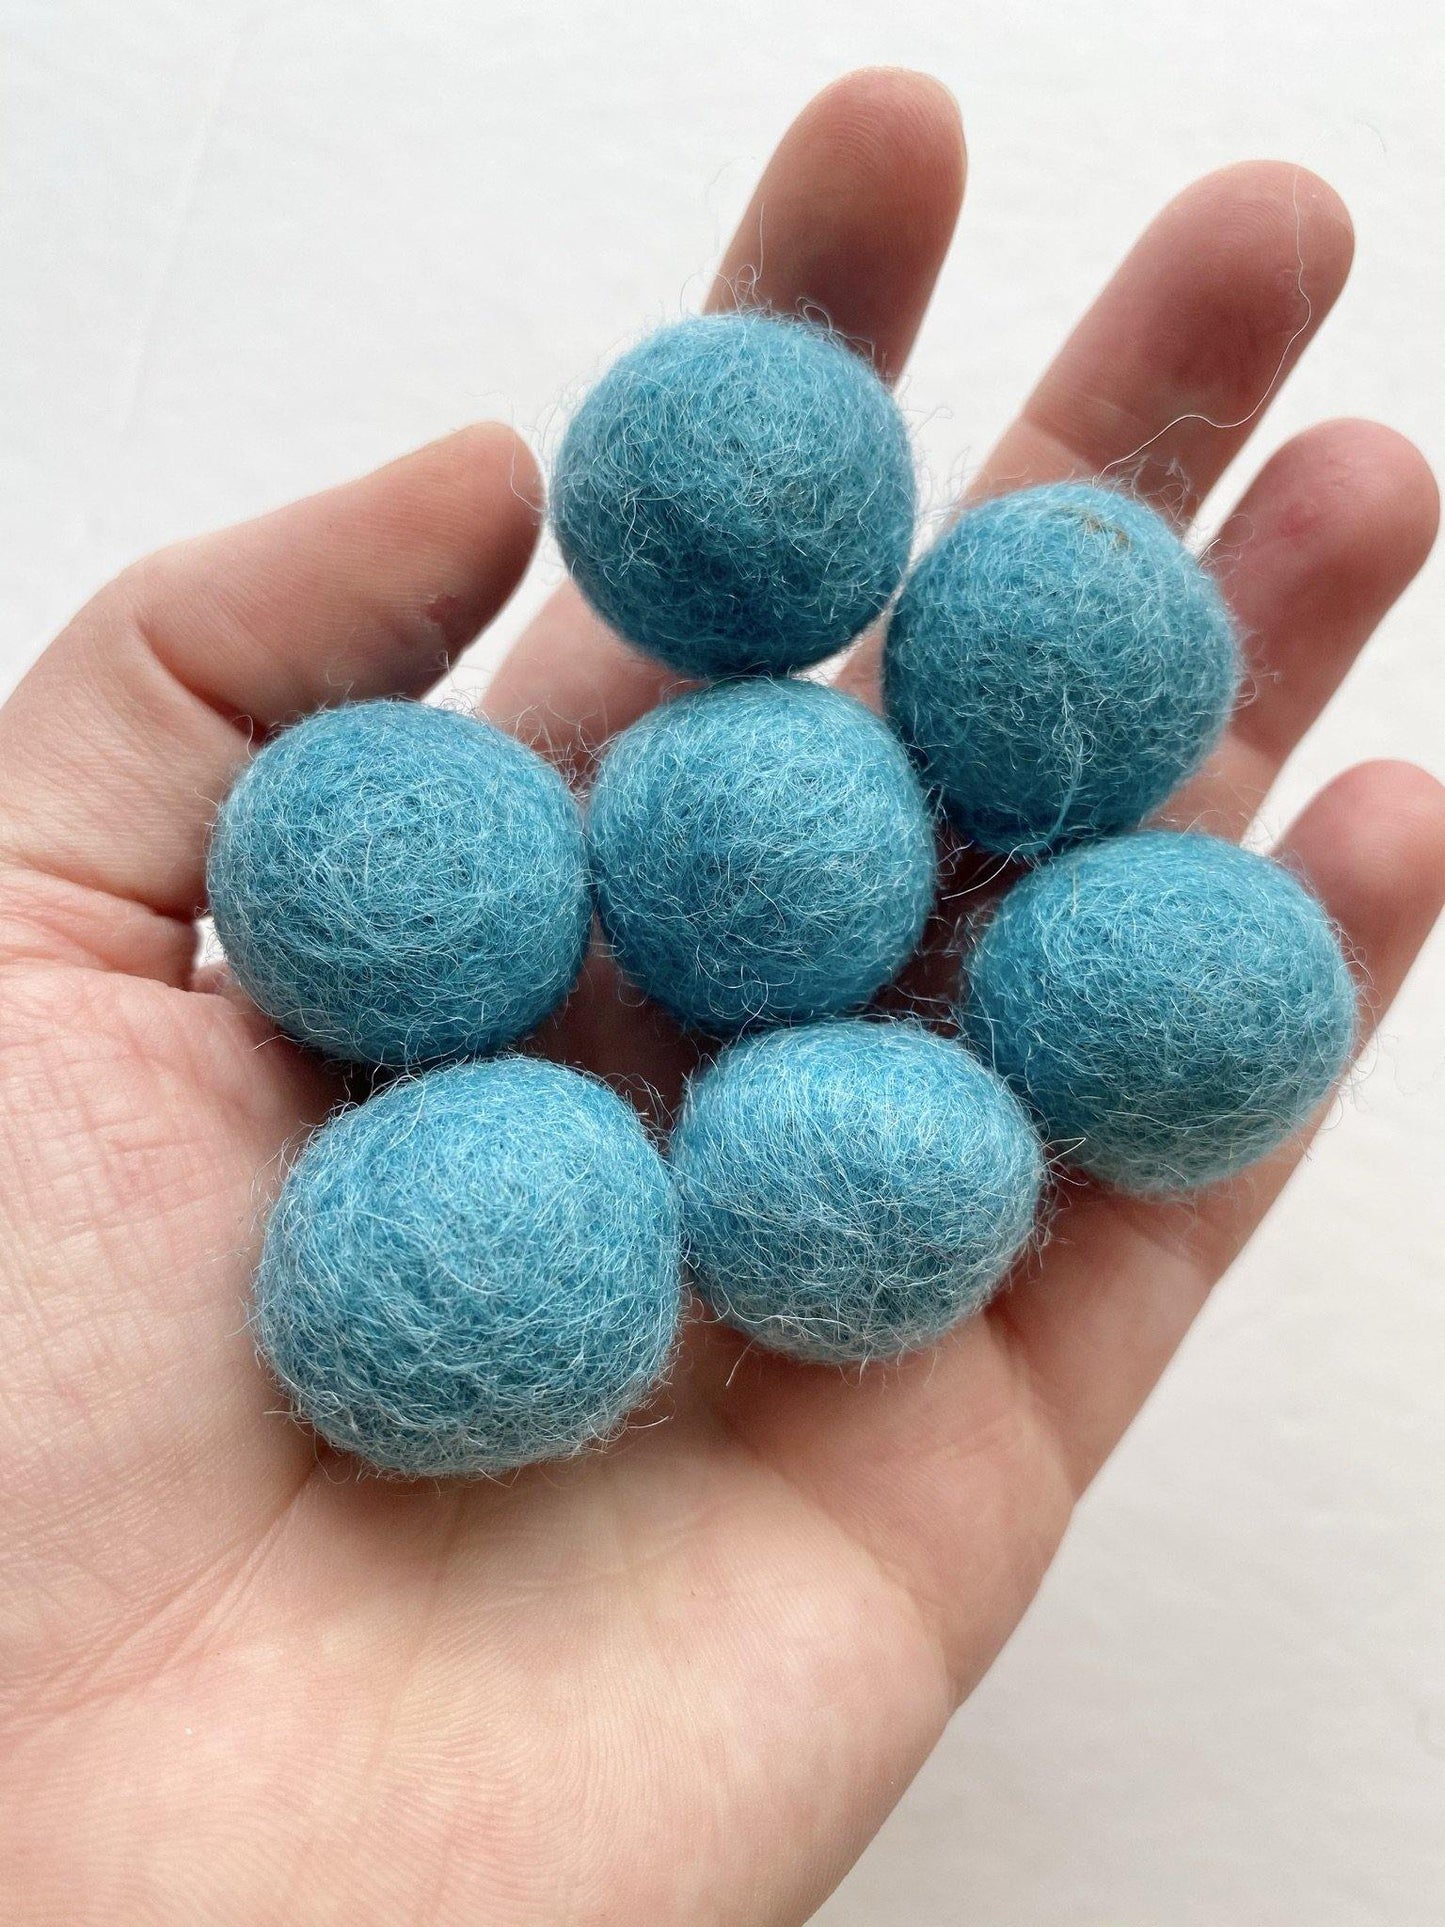 Blue Ombre - 2 cm Felt Pom Pom Balls - Wool Jamboree